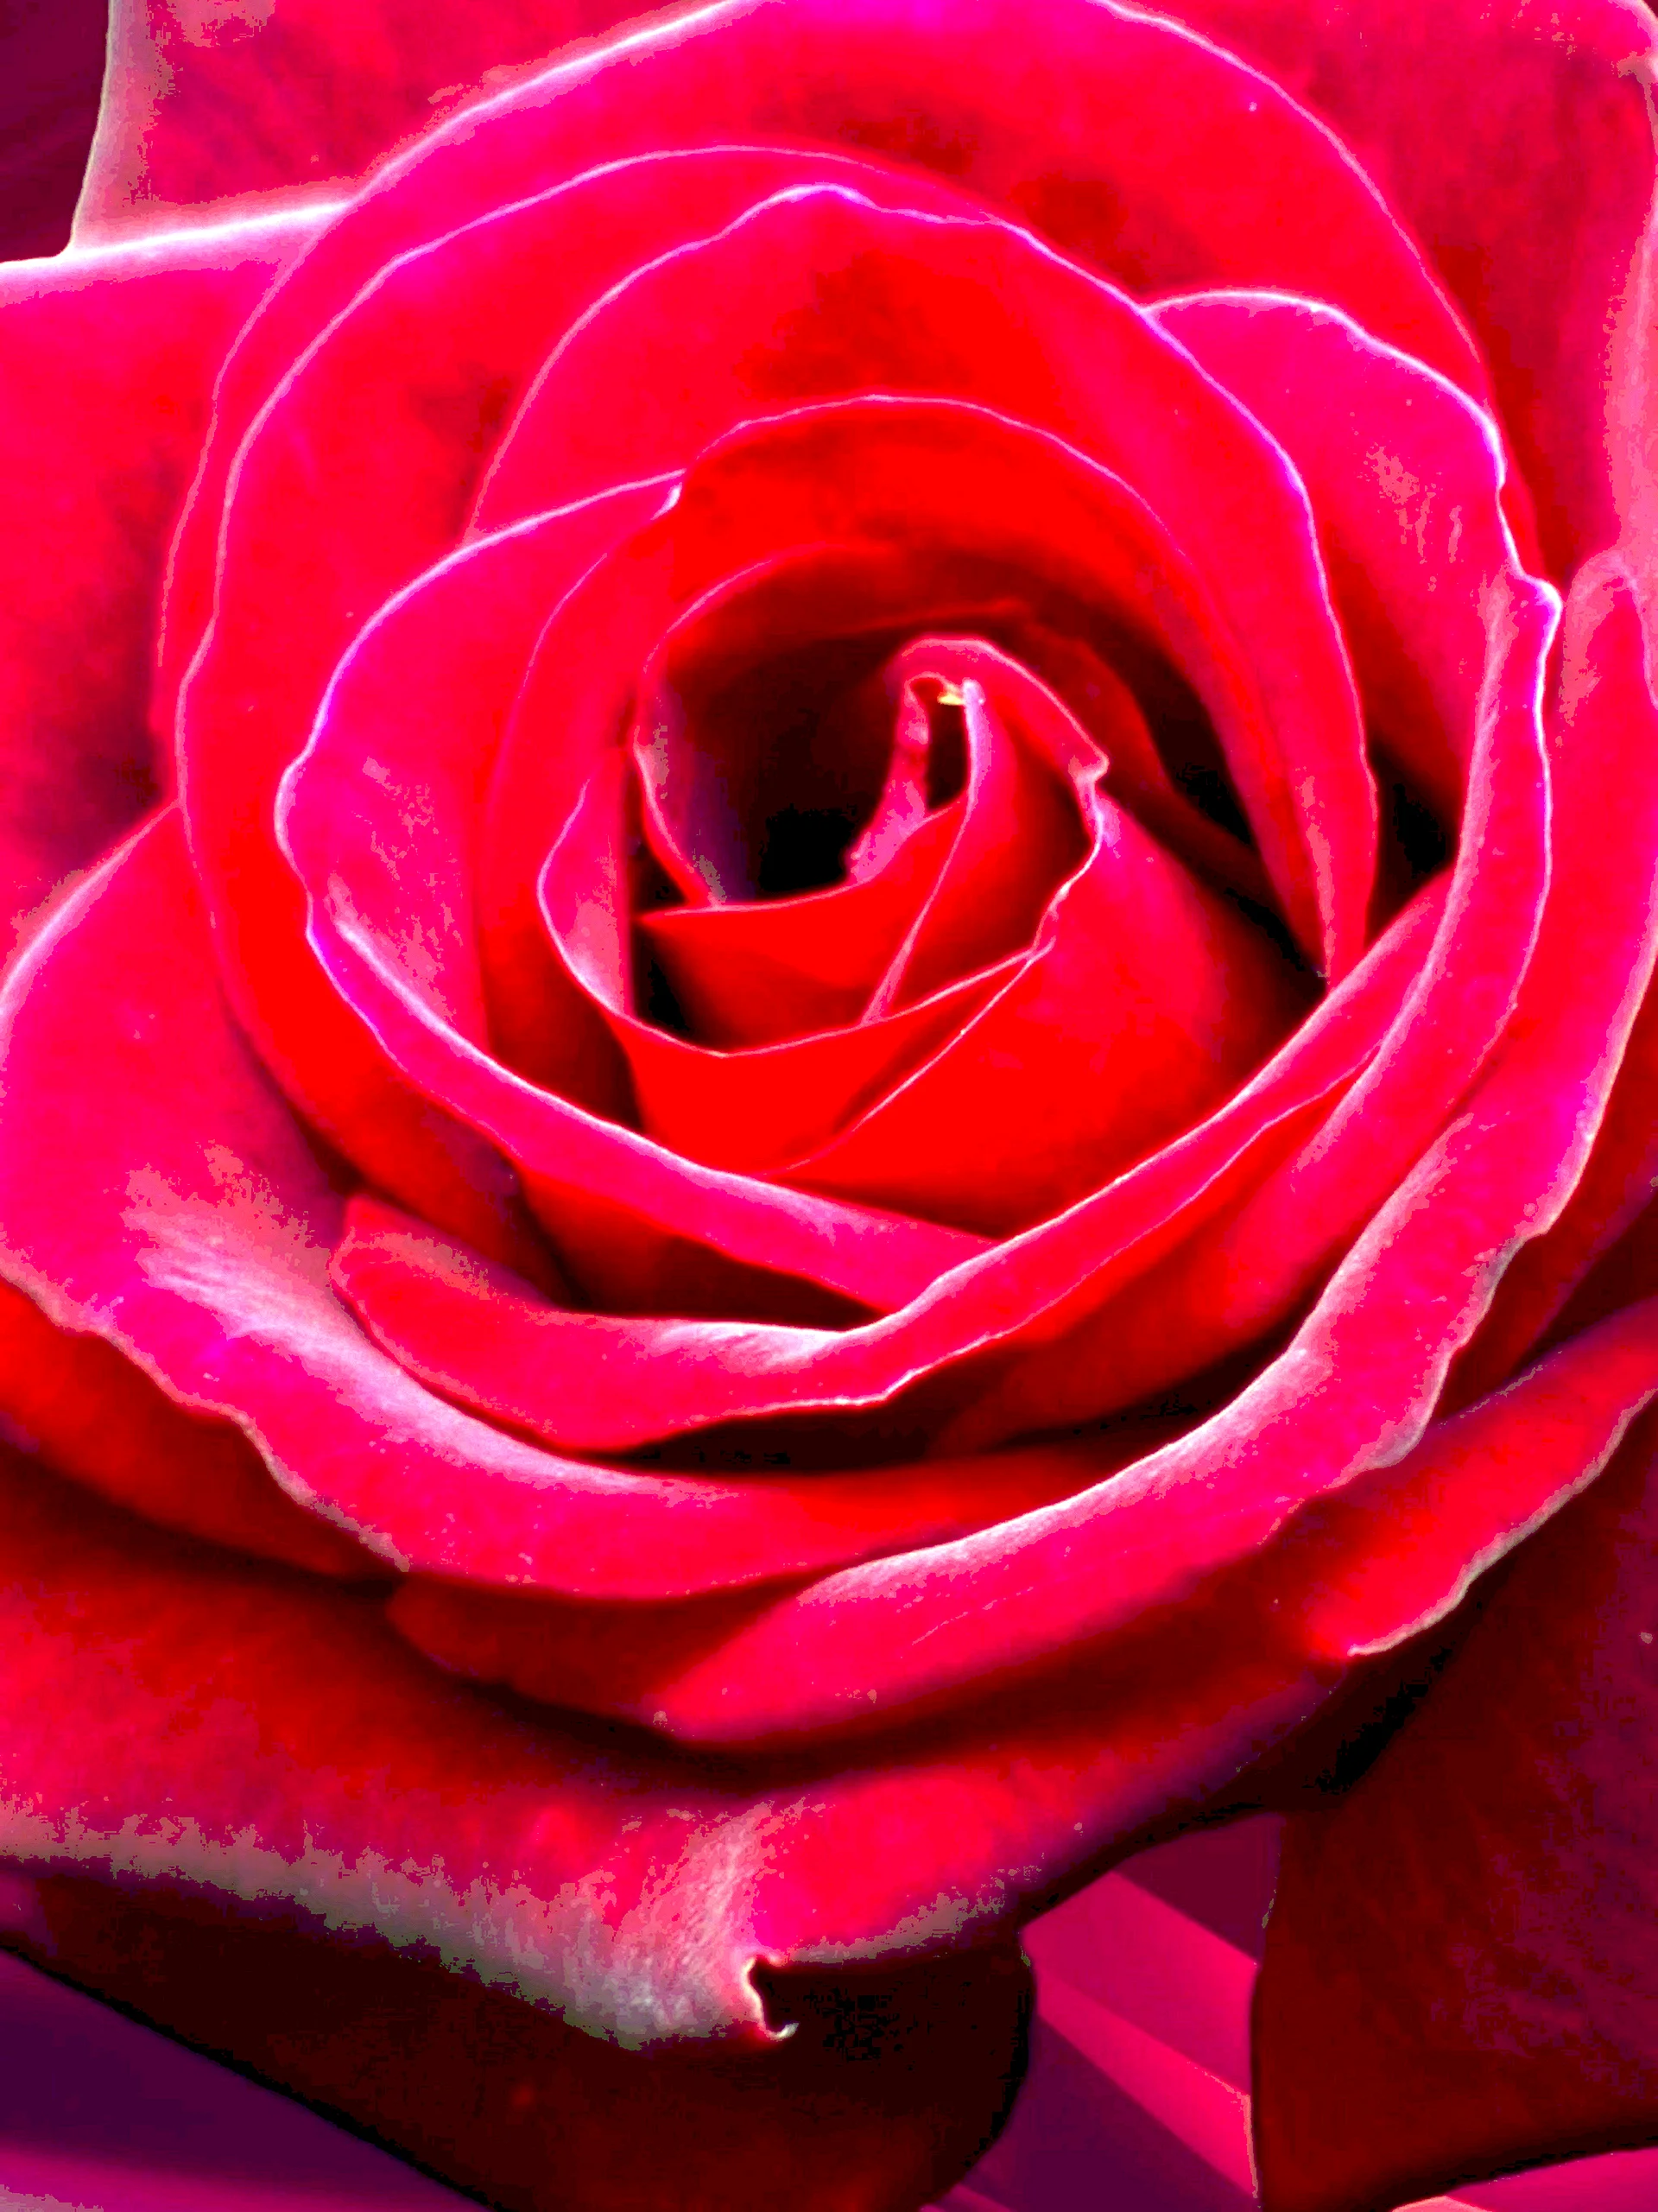 Abstract Rose Wallpaper